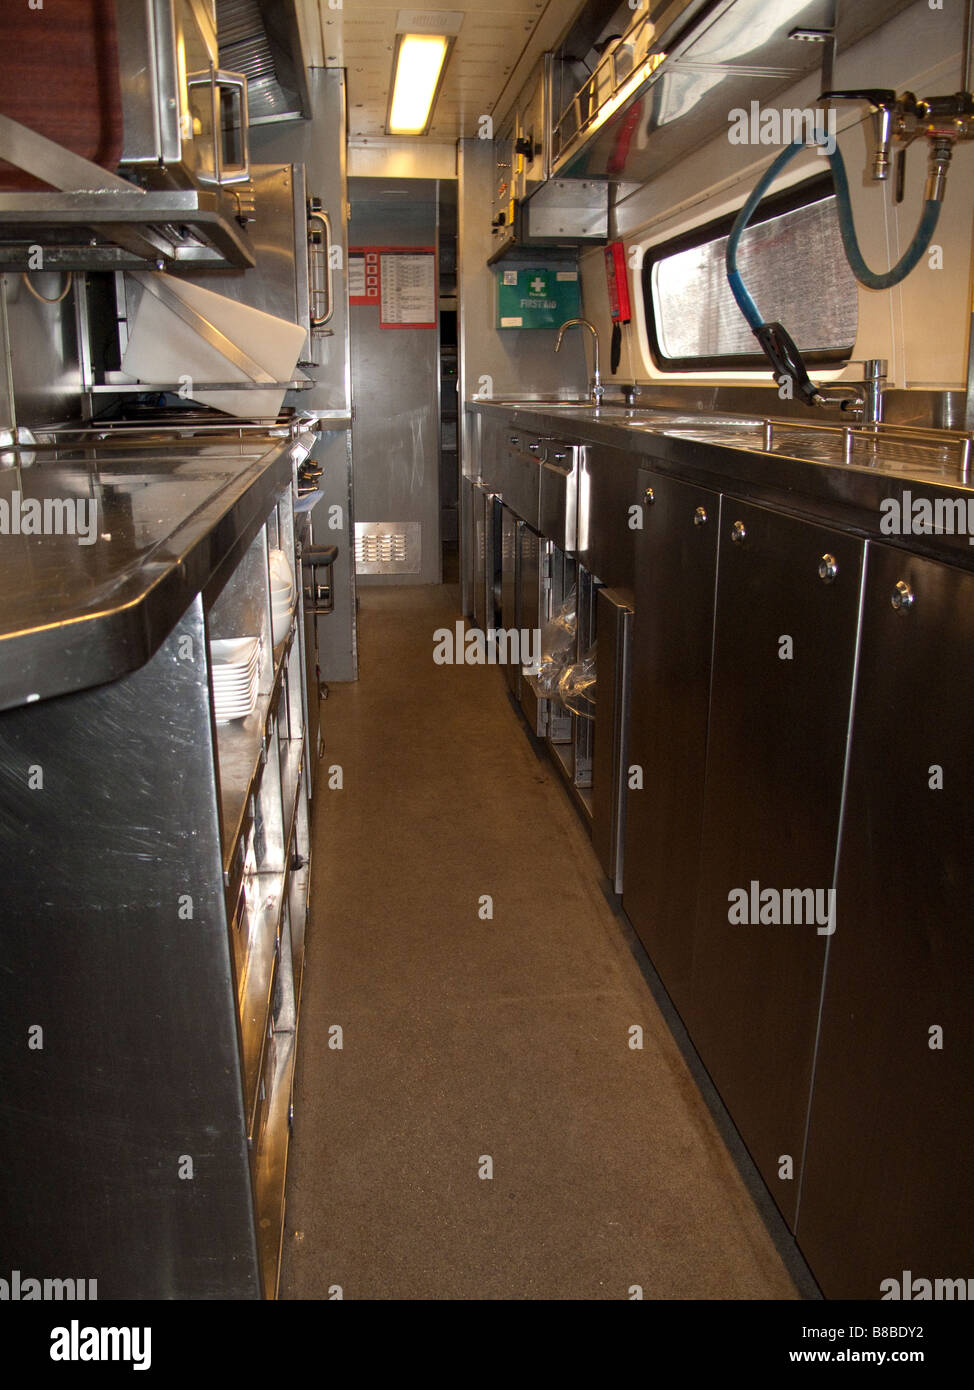 The kitchen of an inter-city 225 buffet car. Stock Photo